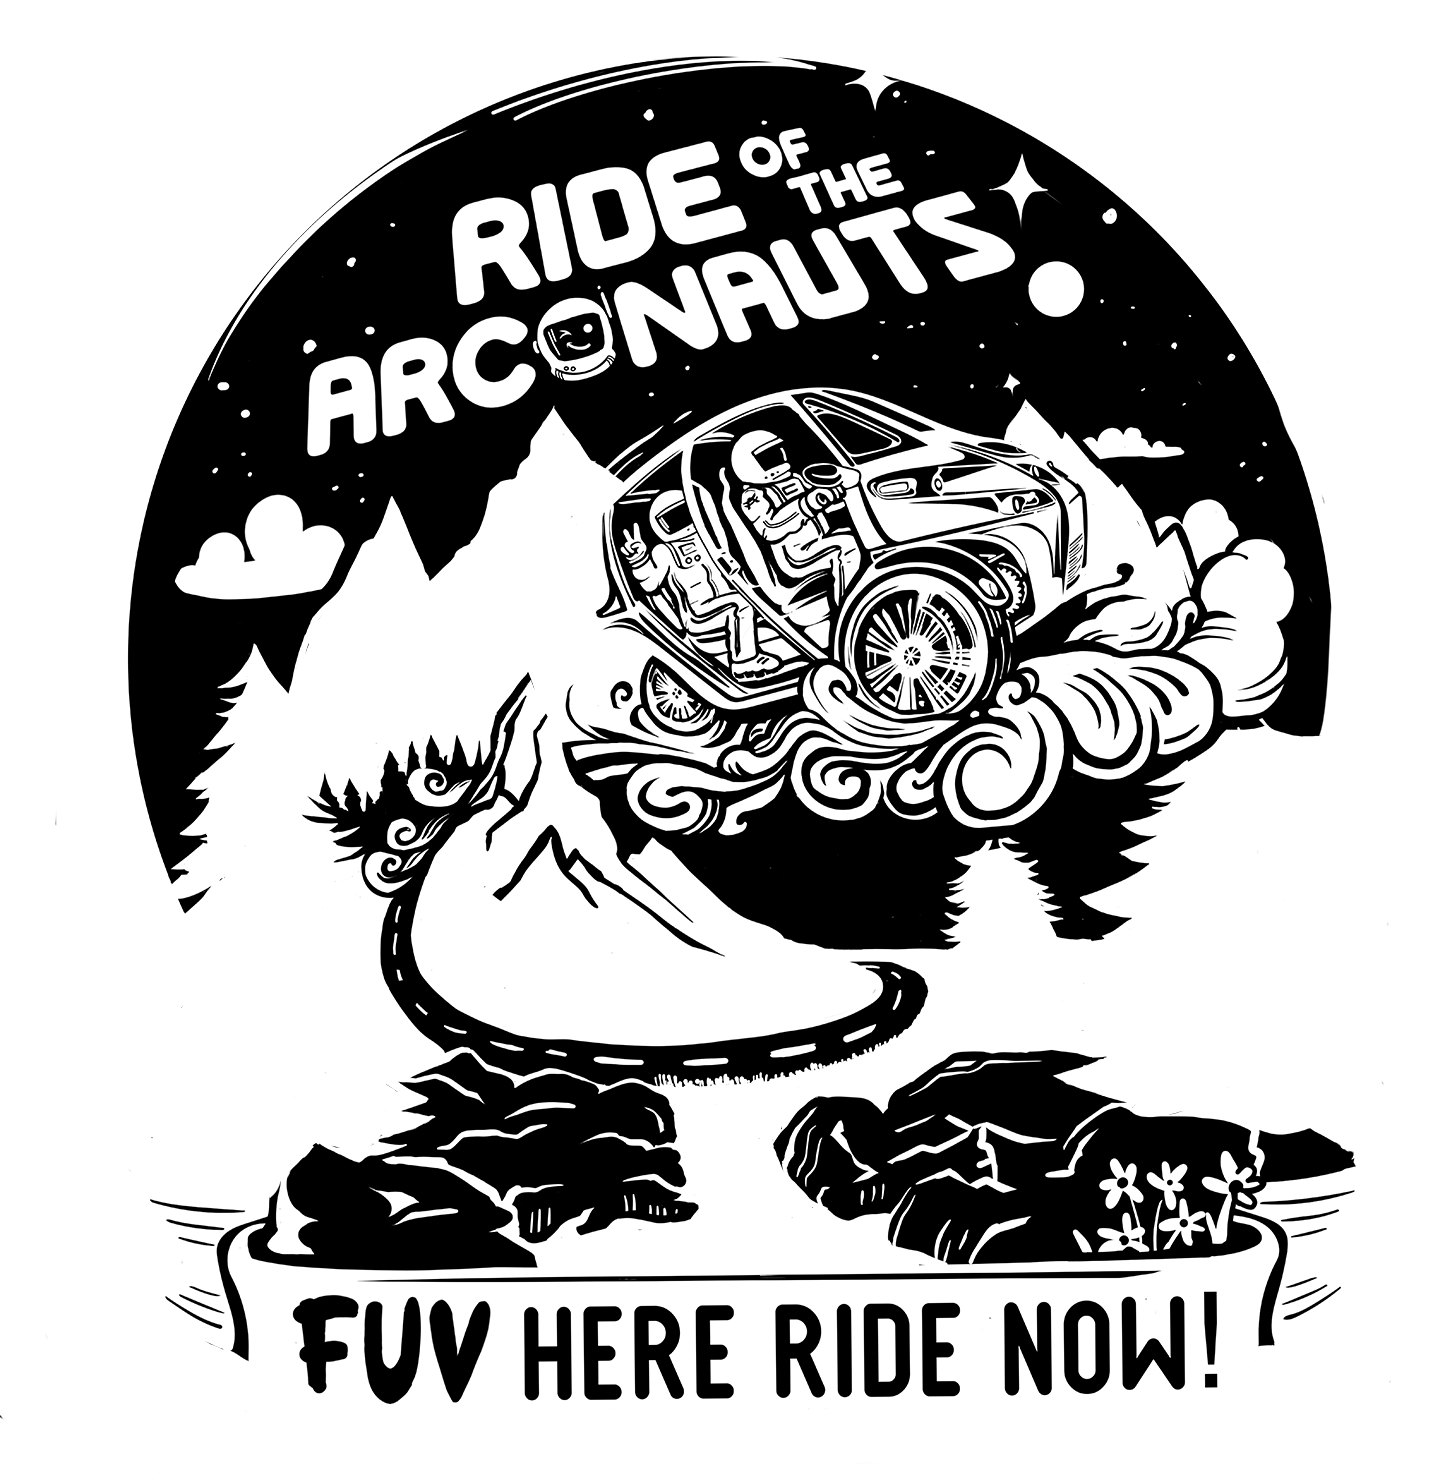 Ride of the Arconauts